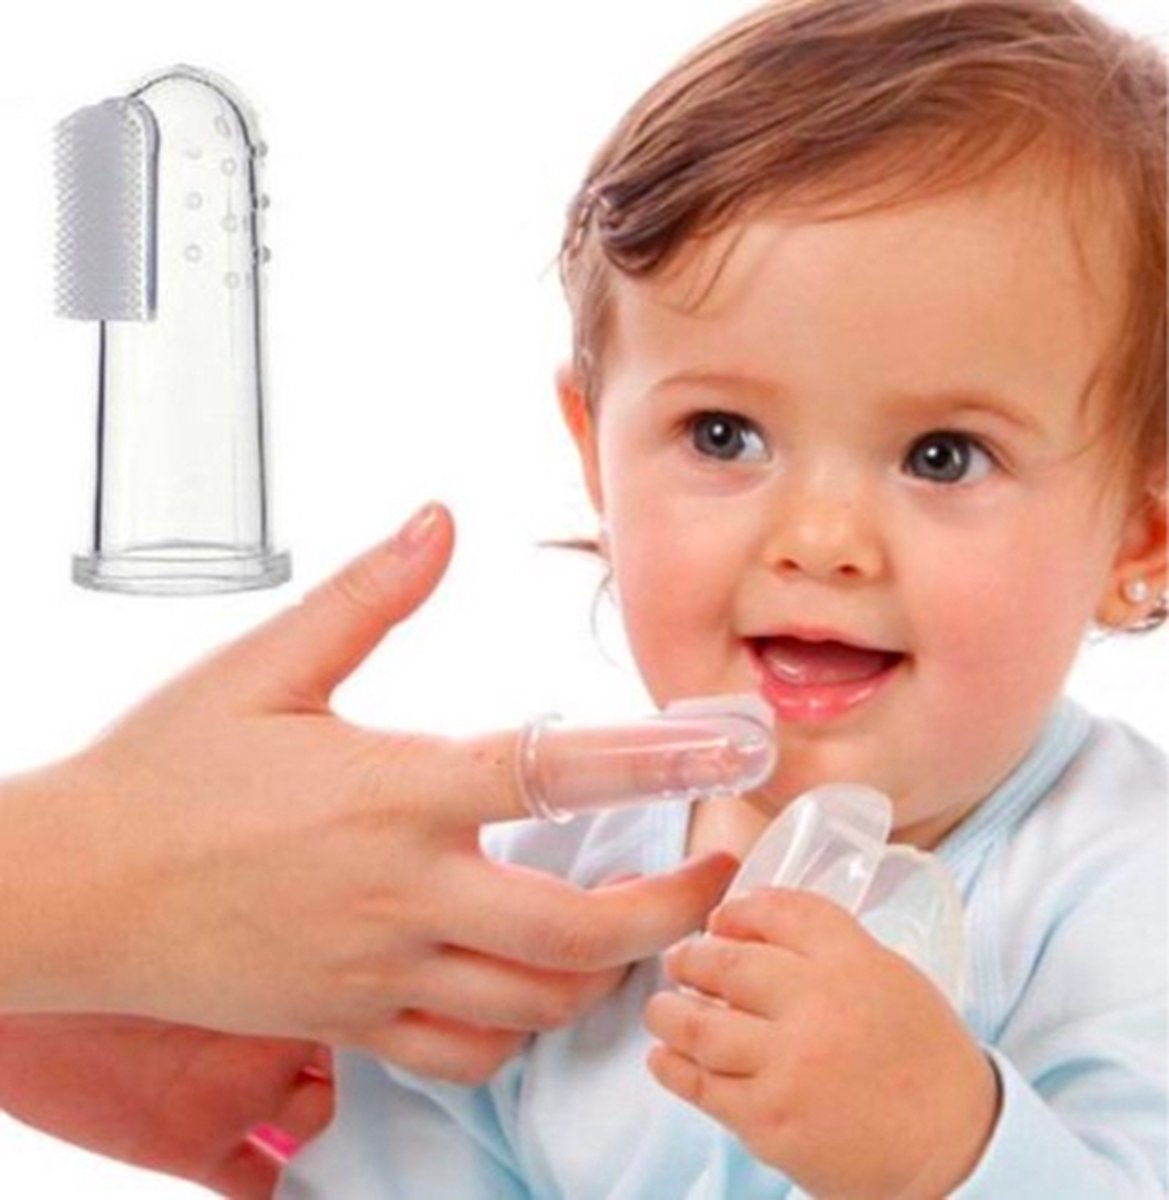 2x Baby tandenborstel - 2 stuks vingertandenborstel kindertandenborstel op vinger siliconen